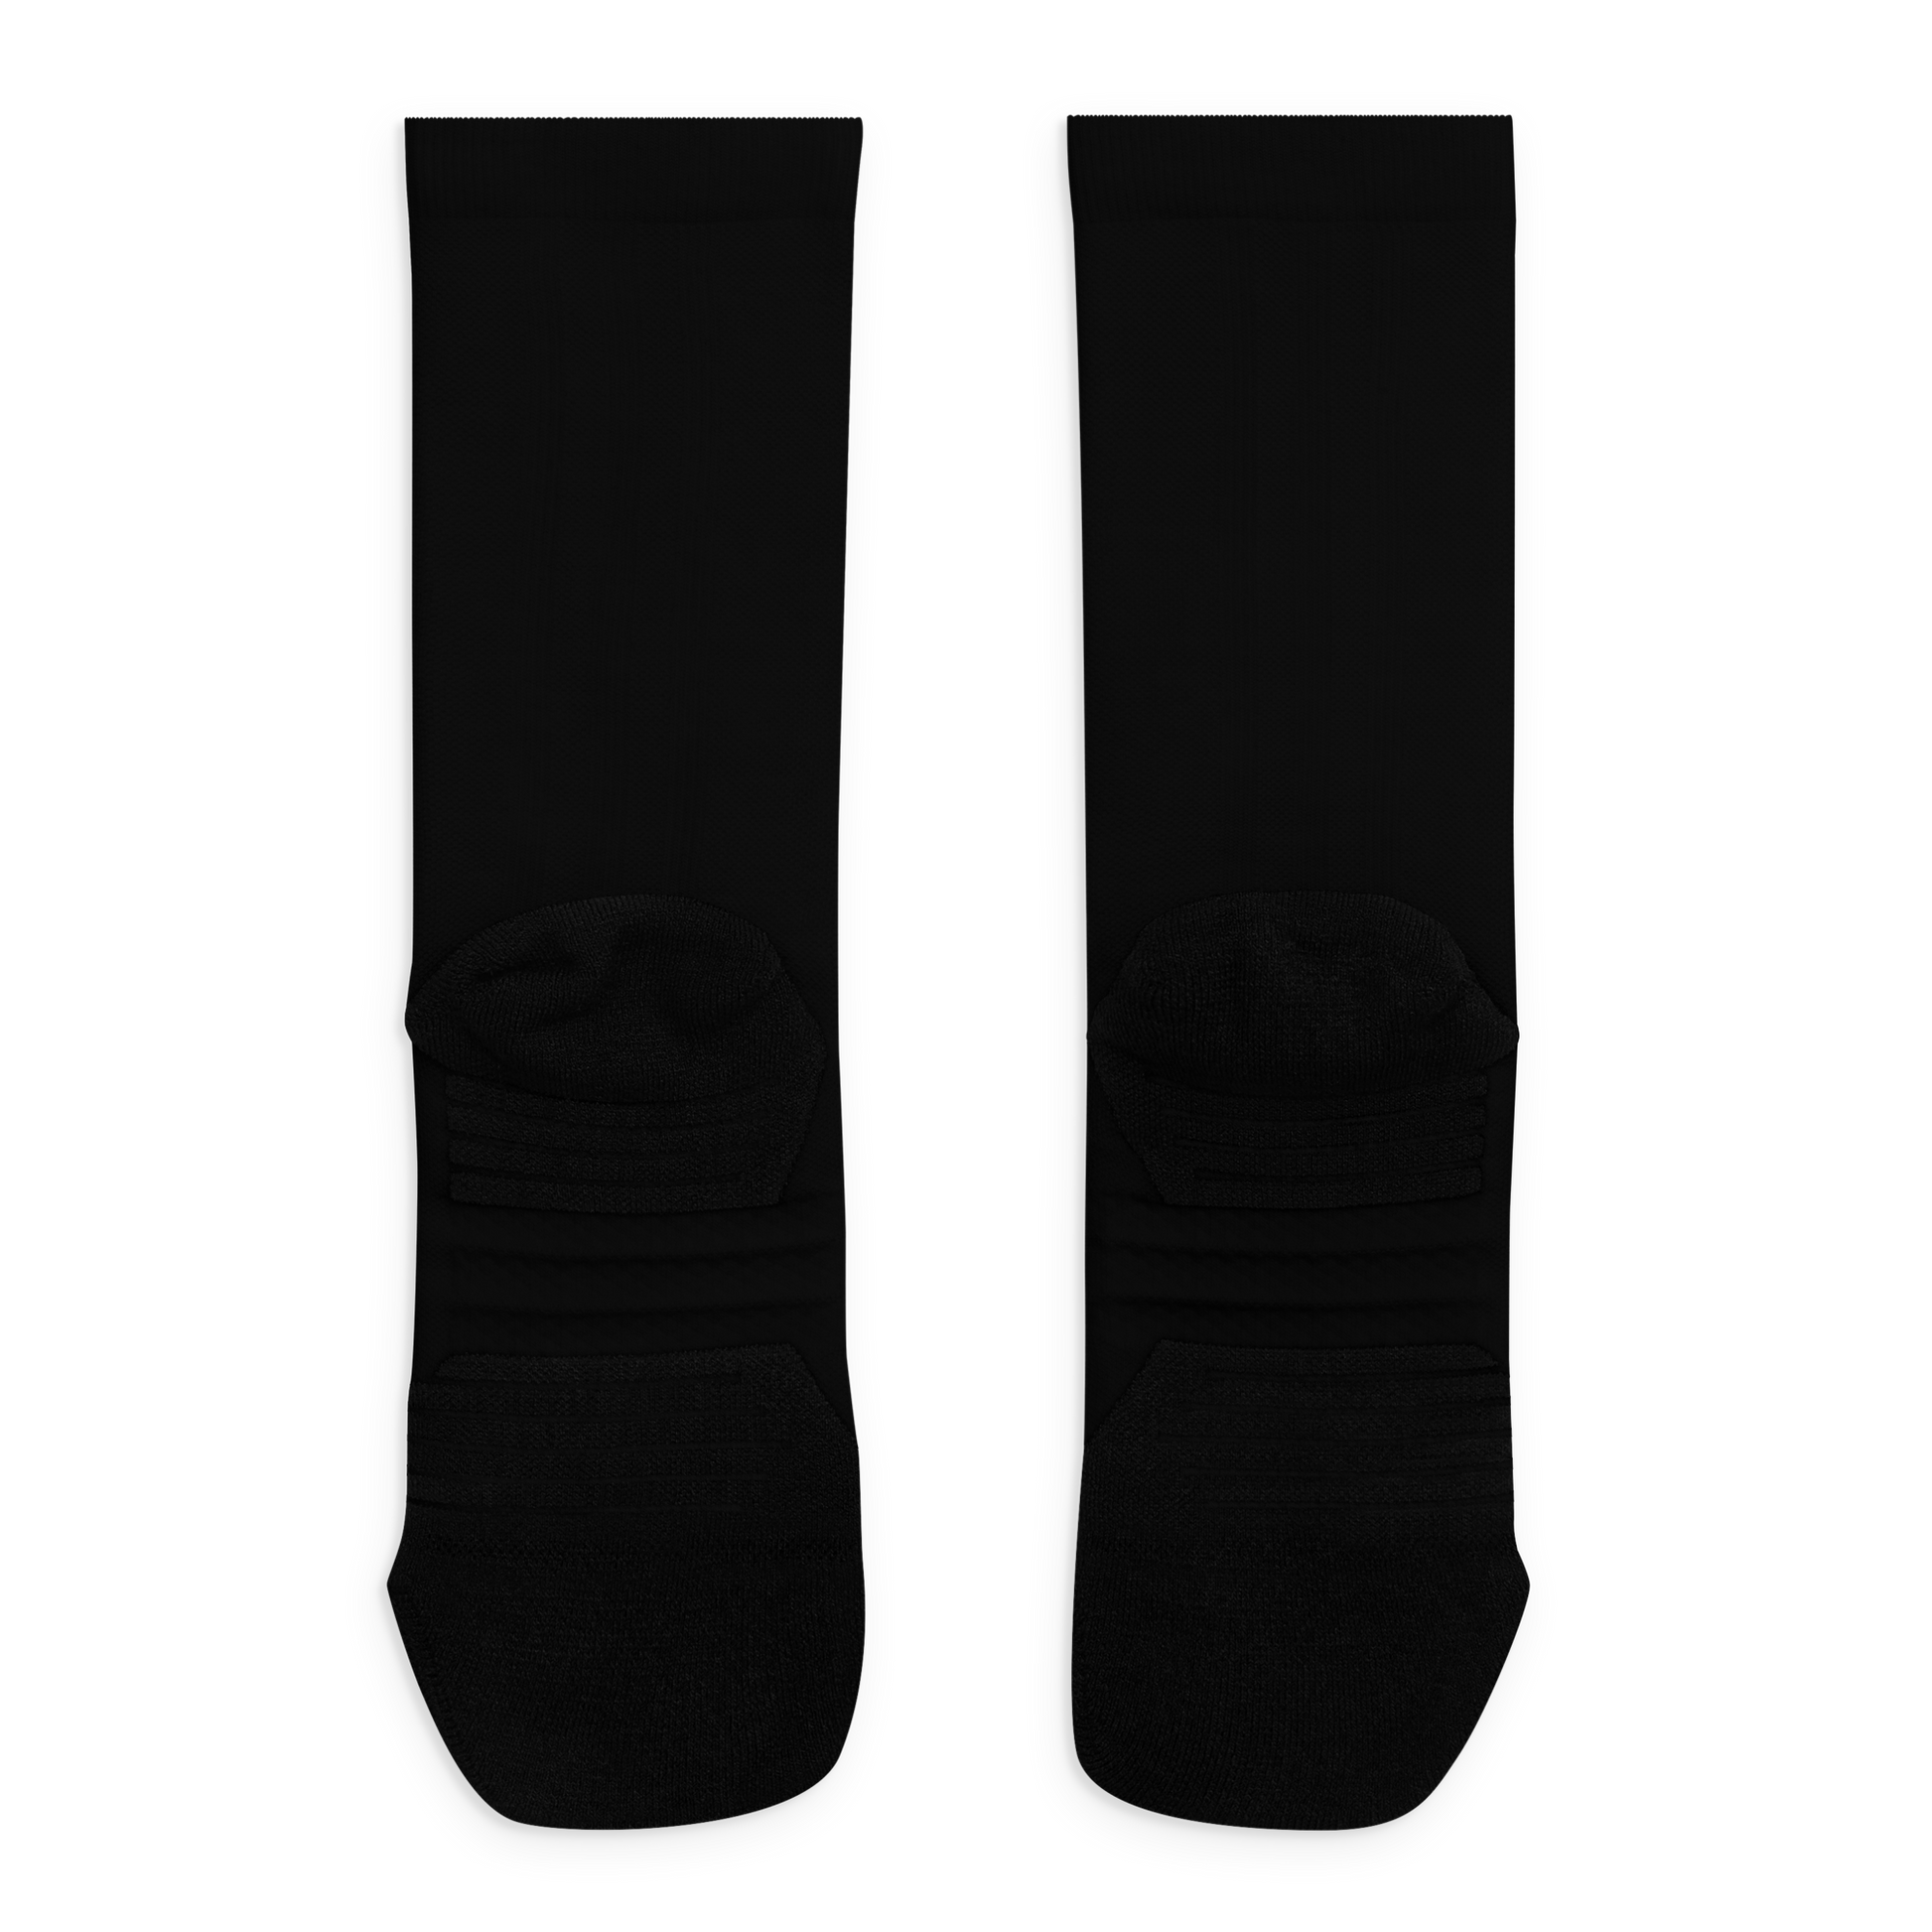 Symbol Crew Socks - $ecure1